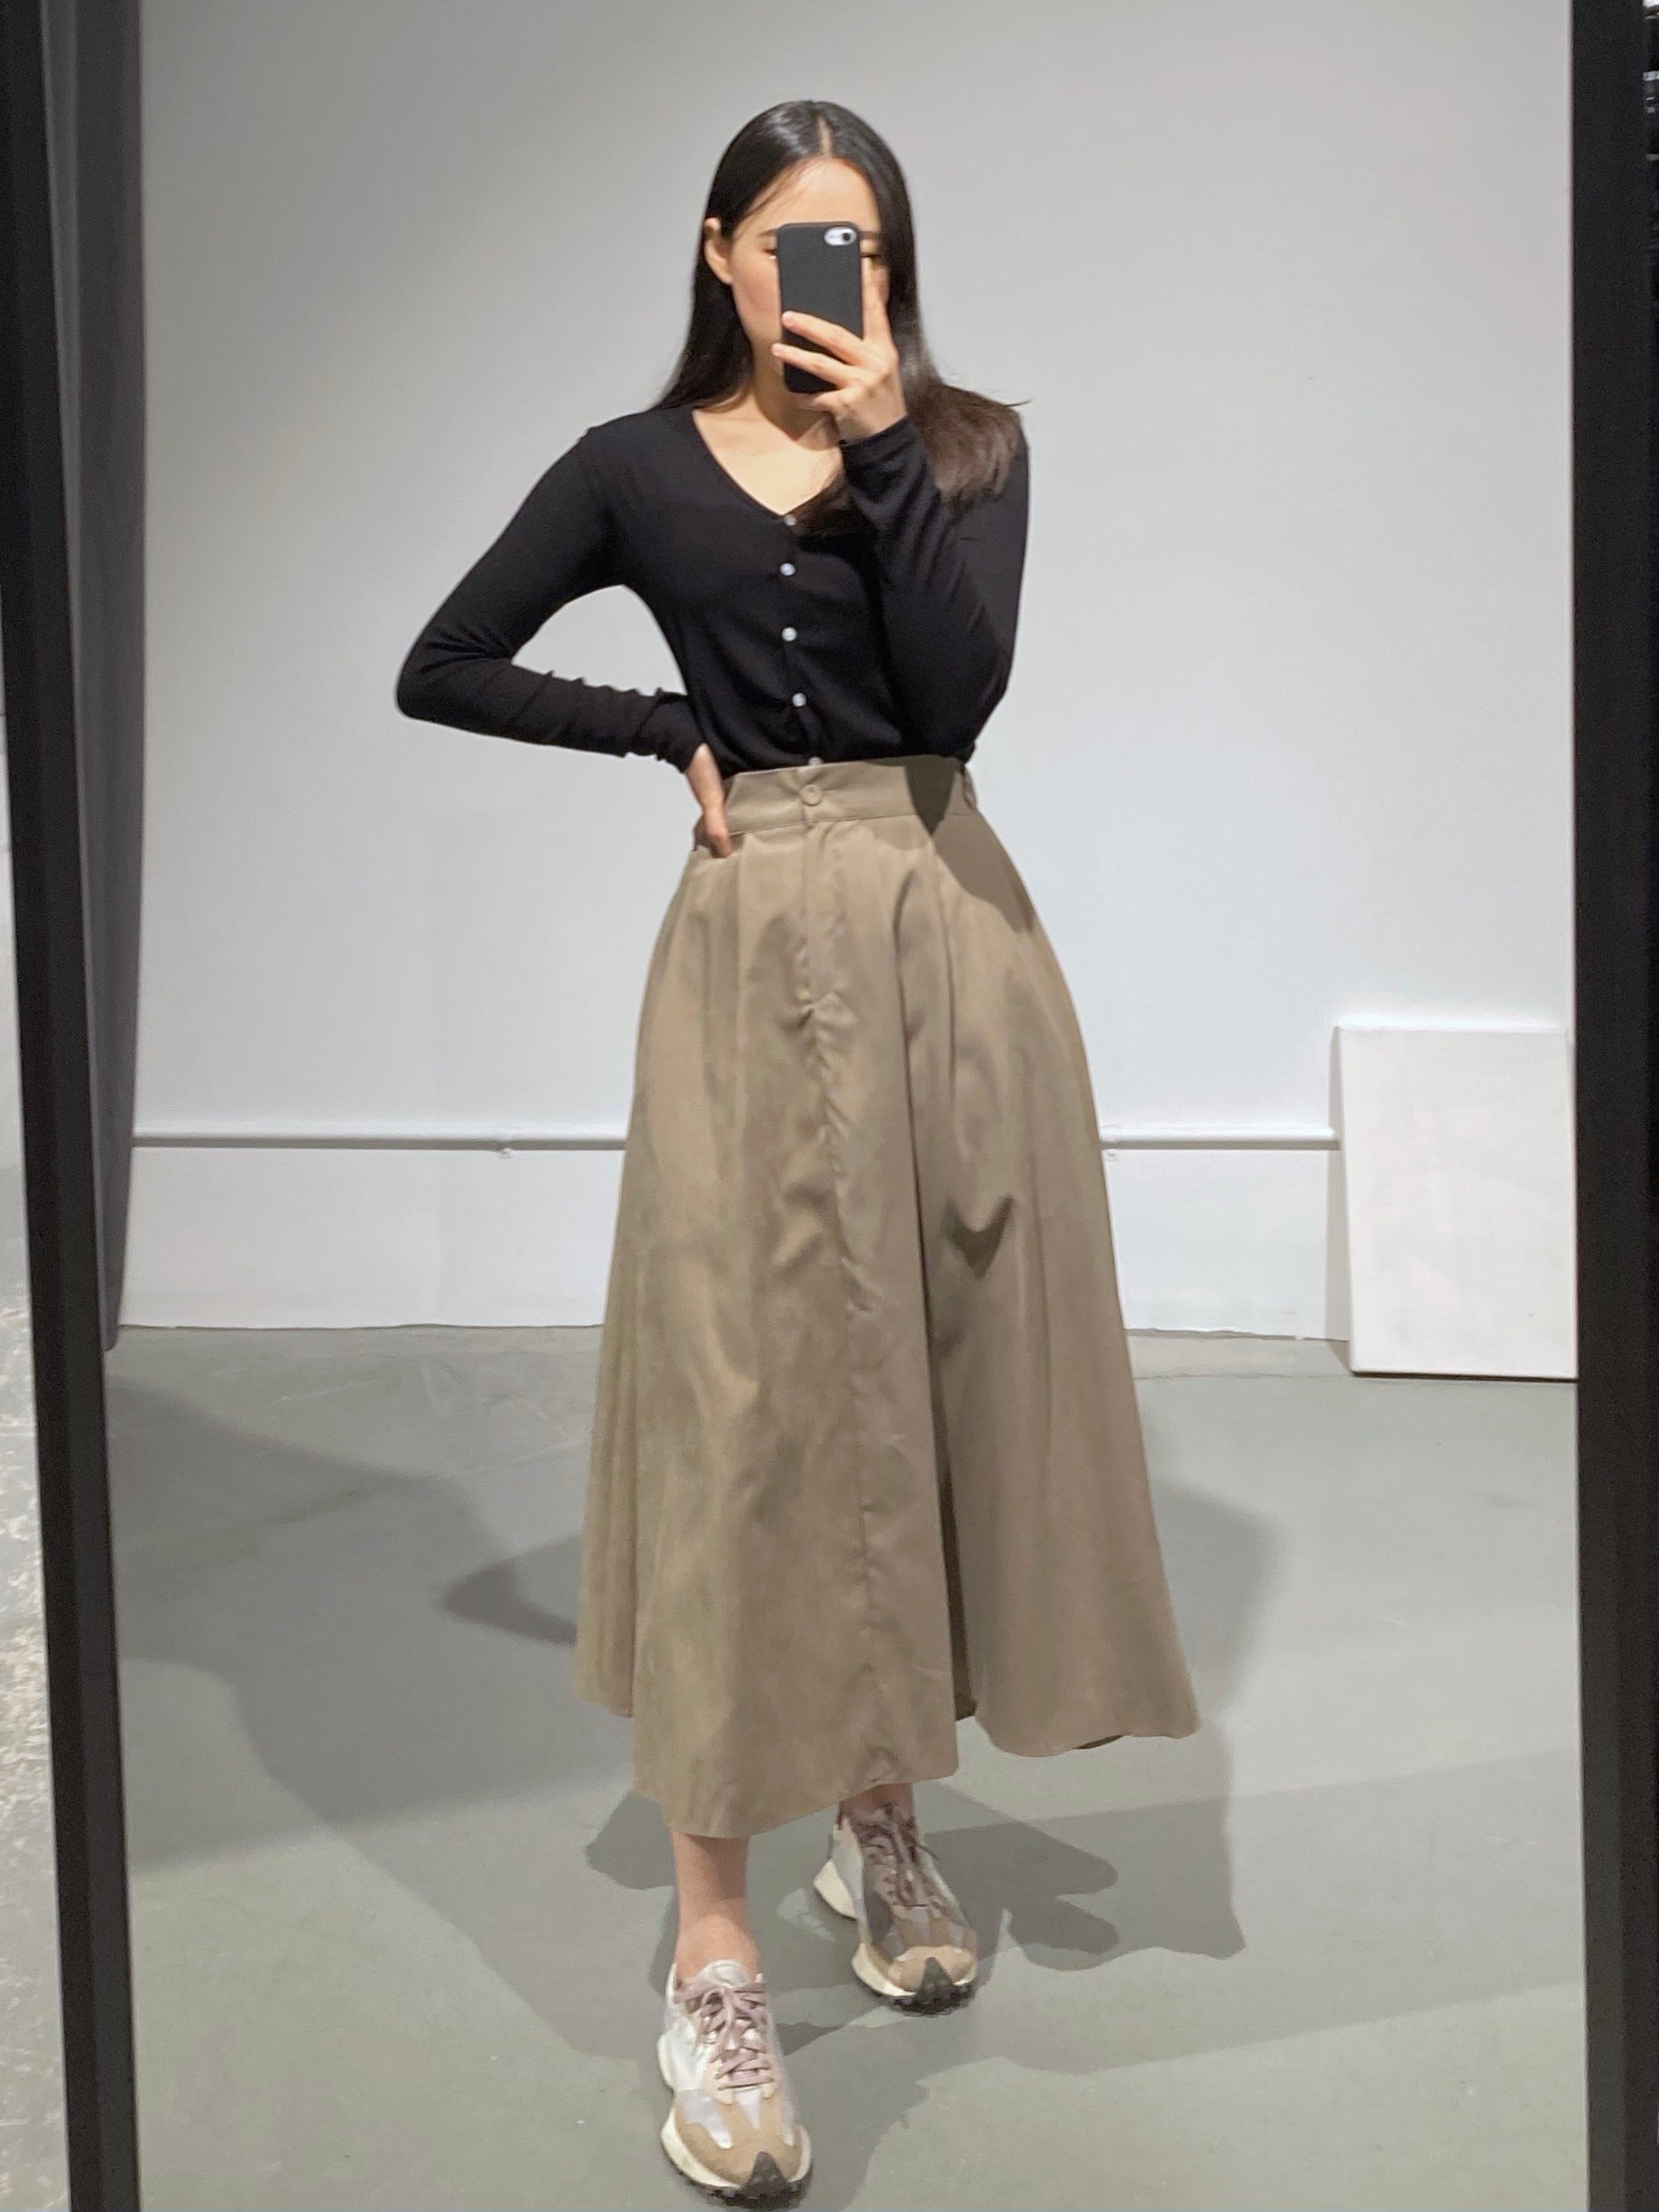 Amecasi Long Skirt